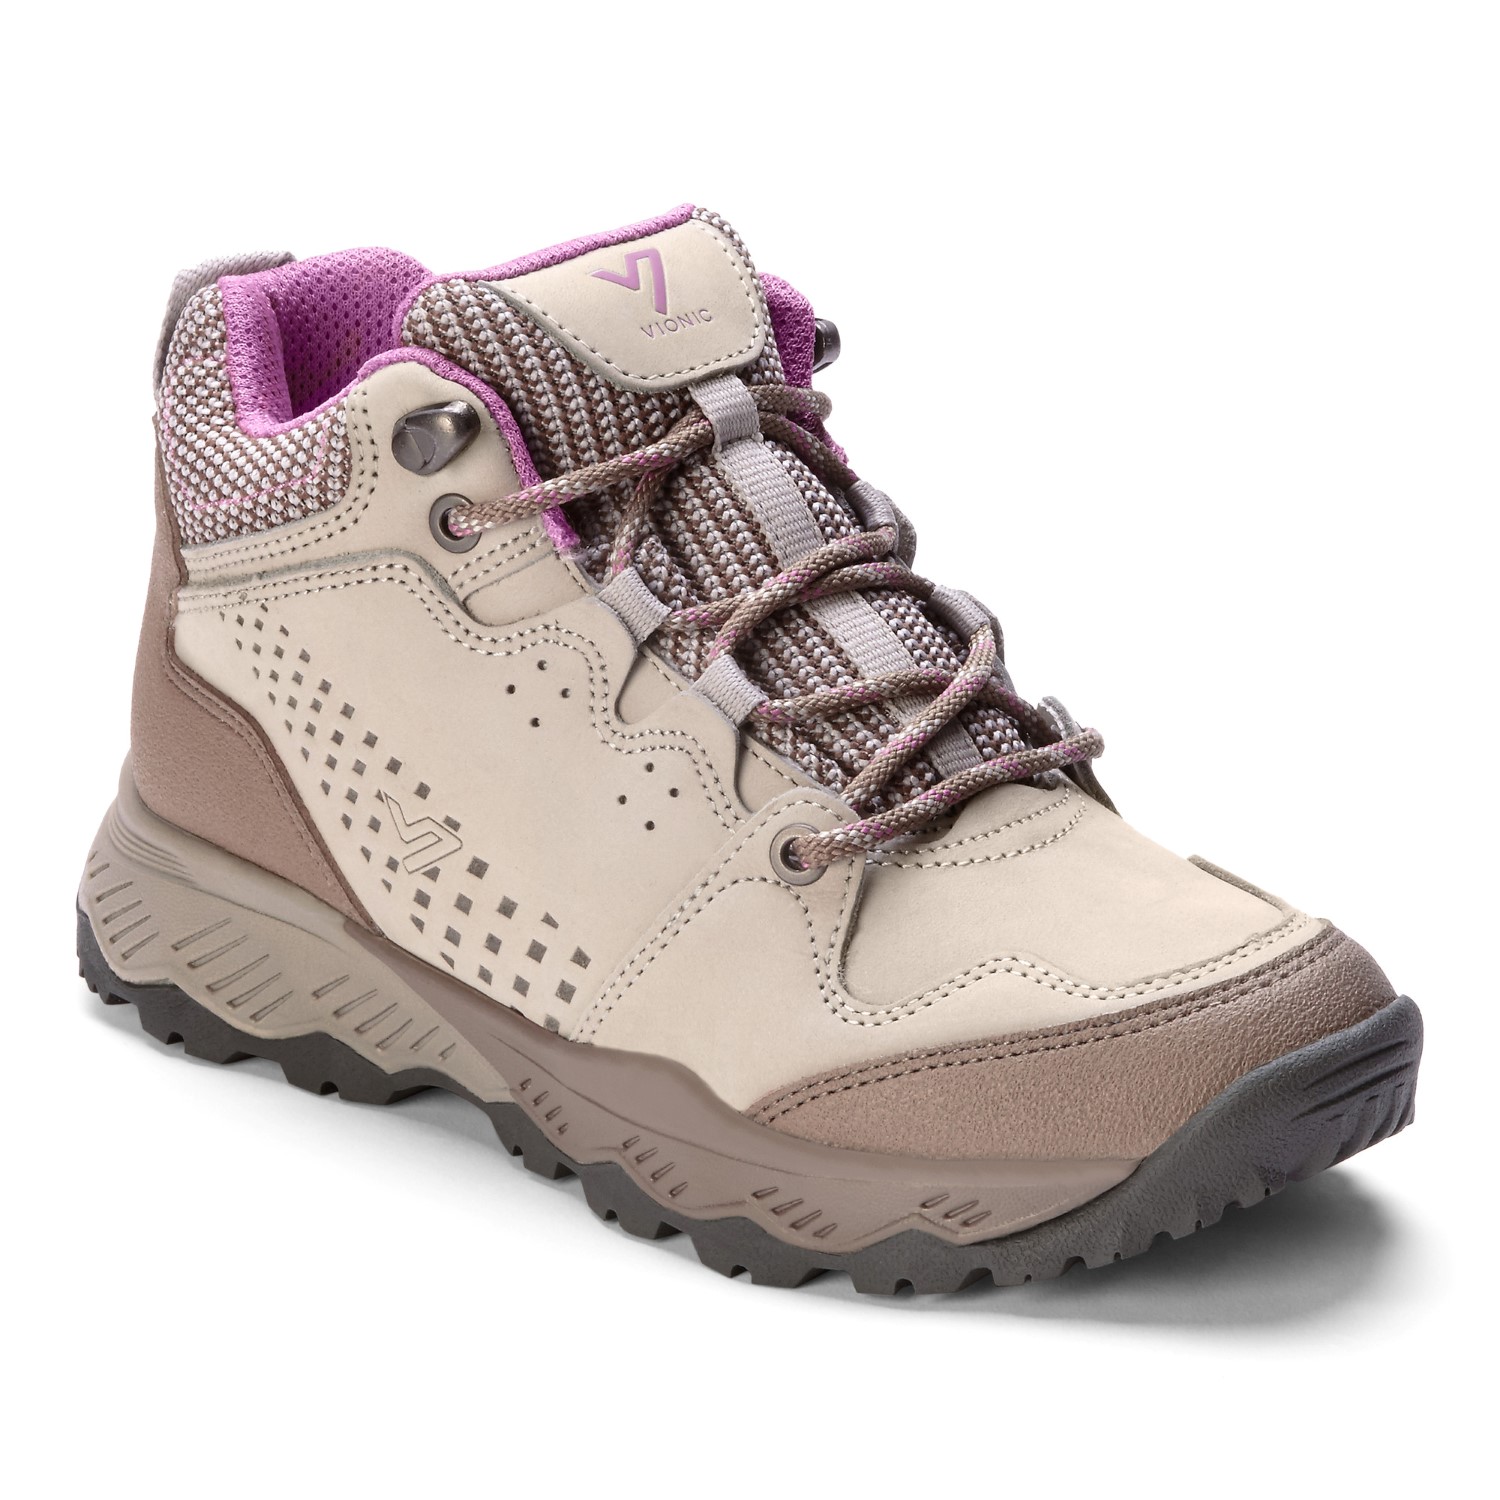 vionic hiking shoes